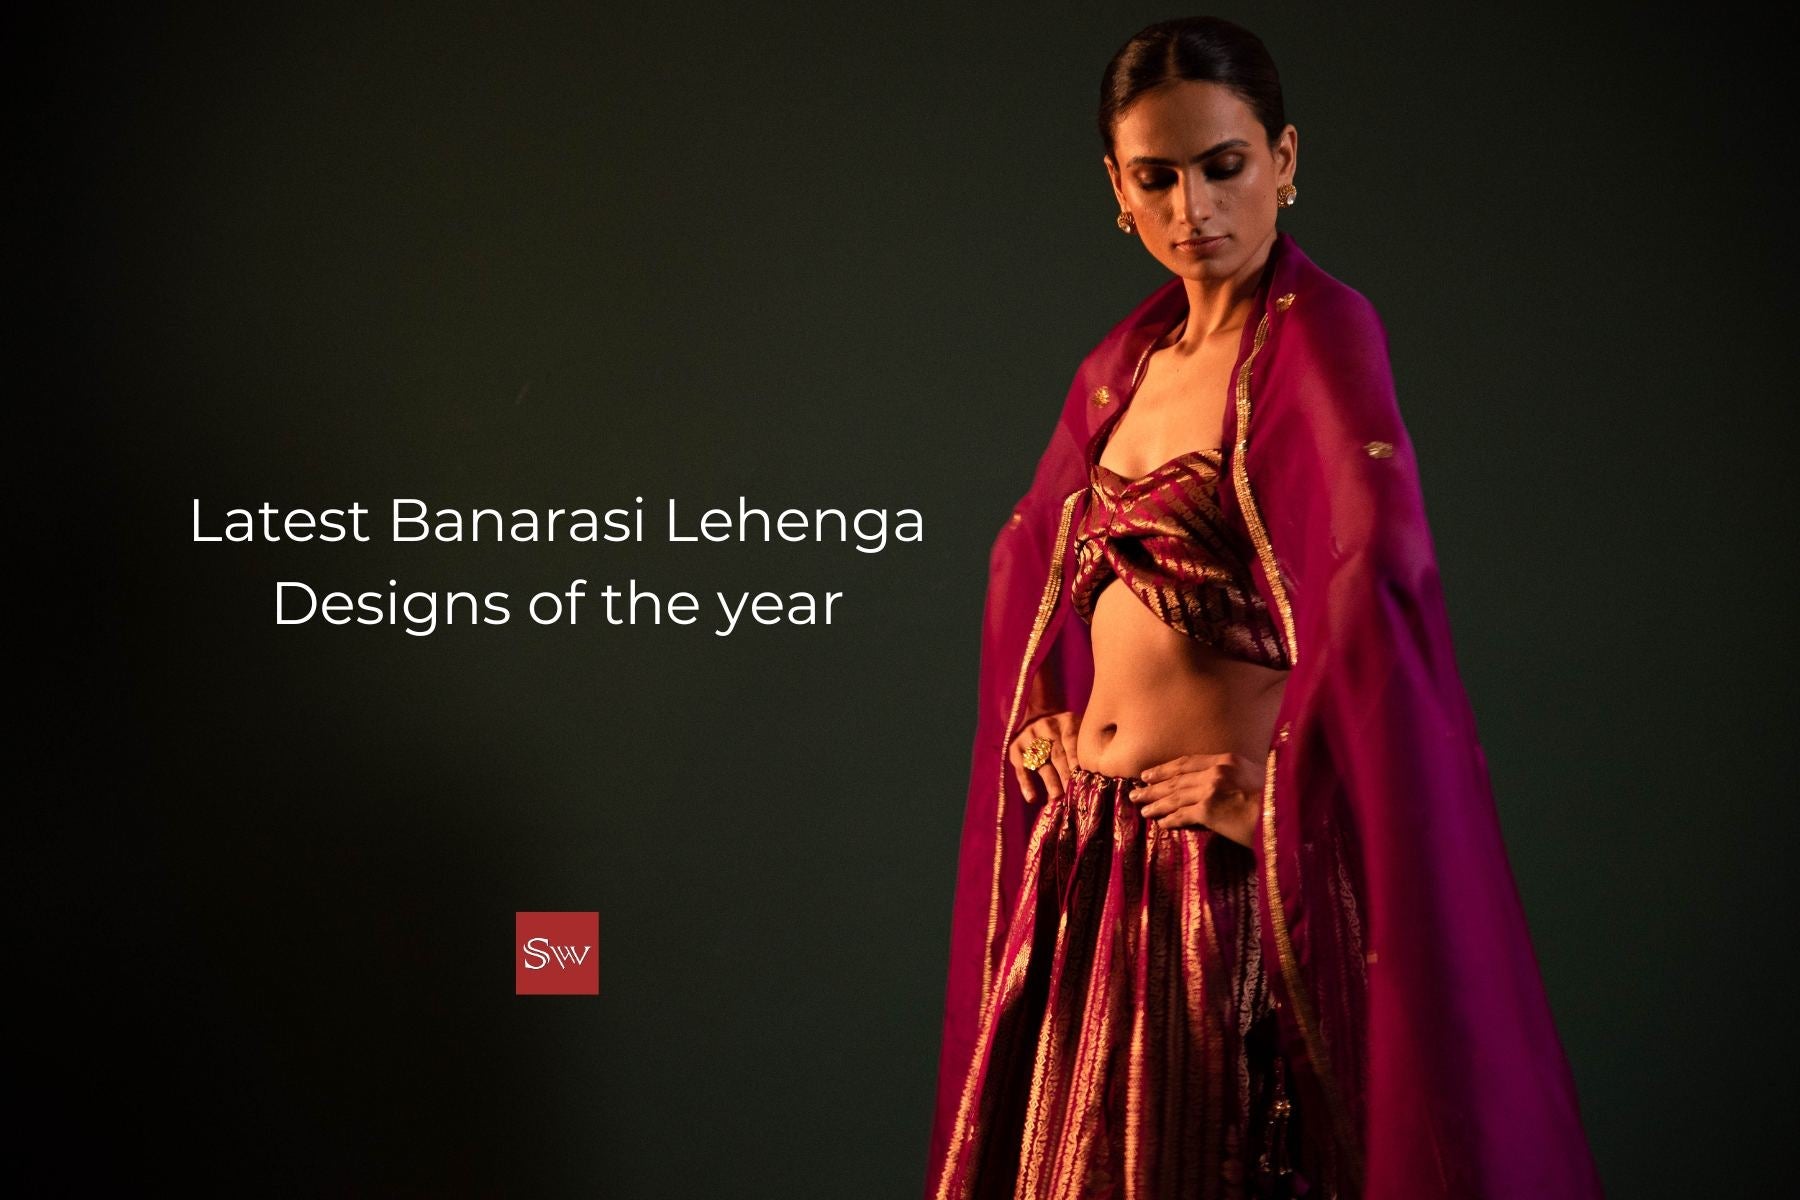 Latest Banarasi Lehenga Designs of the year